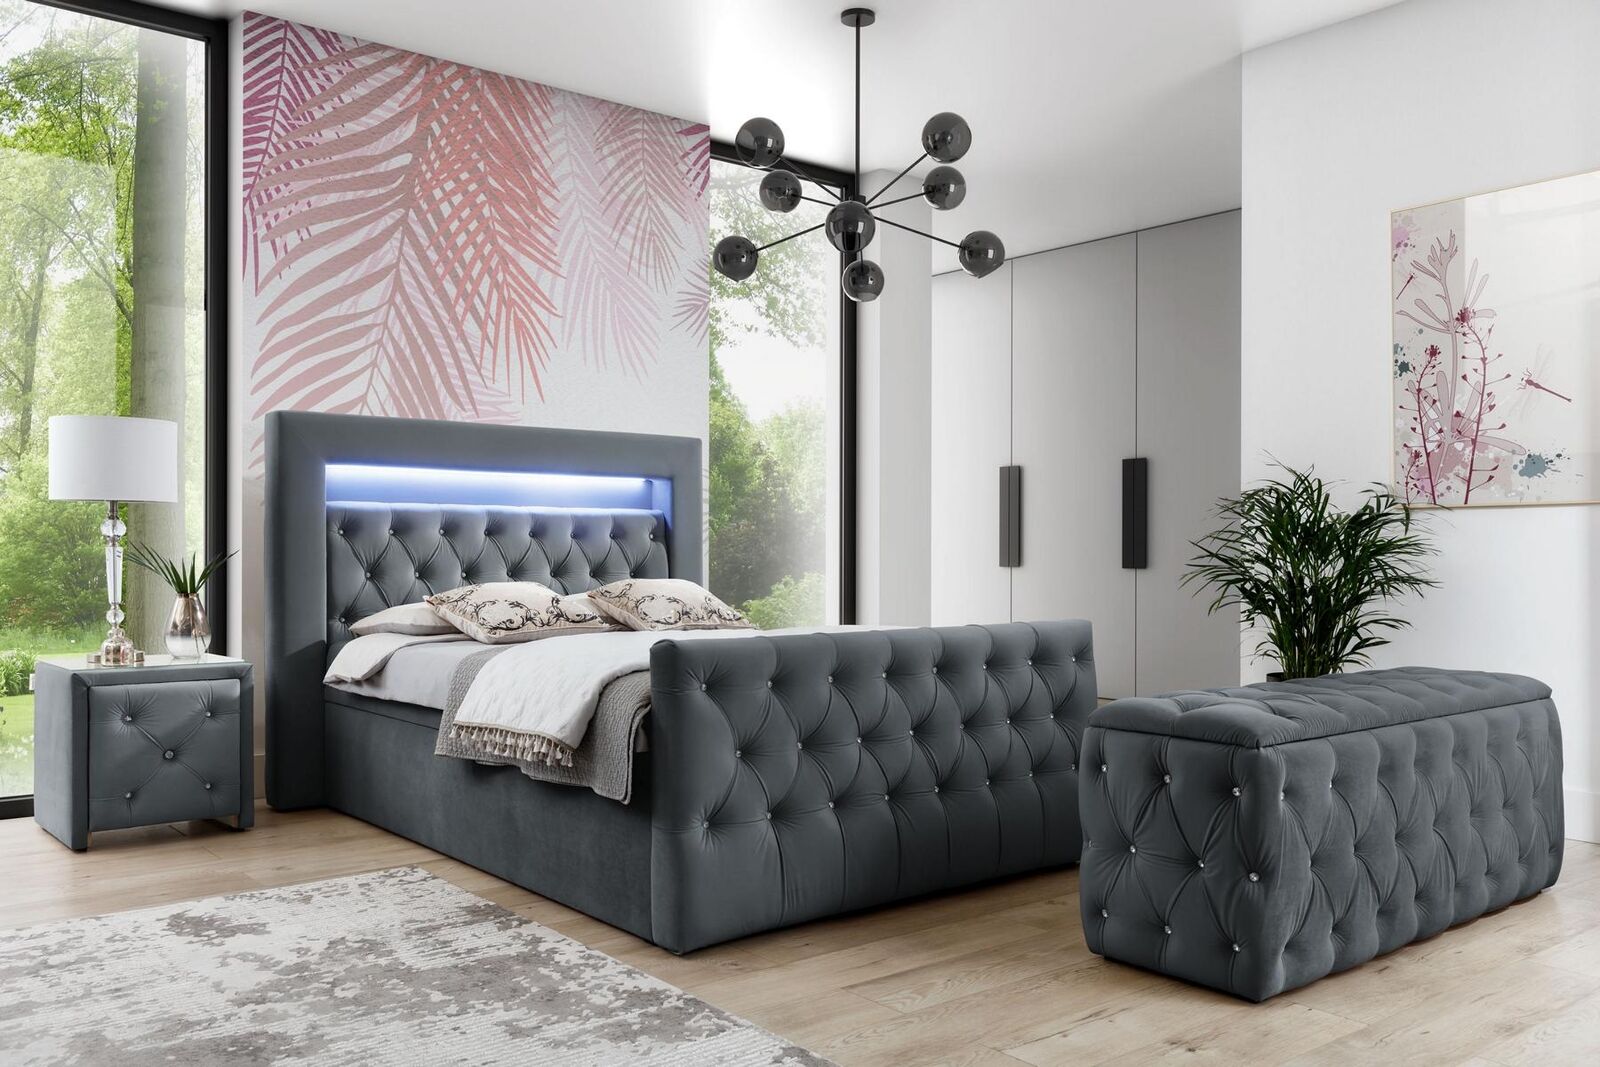 Chesterfield grey bedroom set LED upholstered bed wood bedside tables